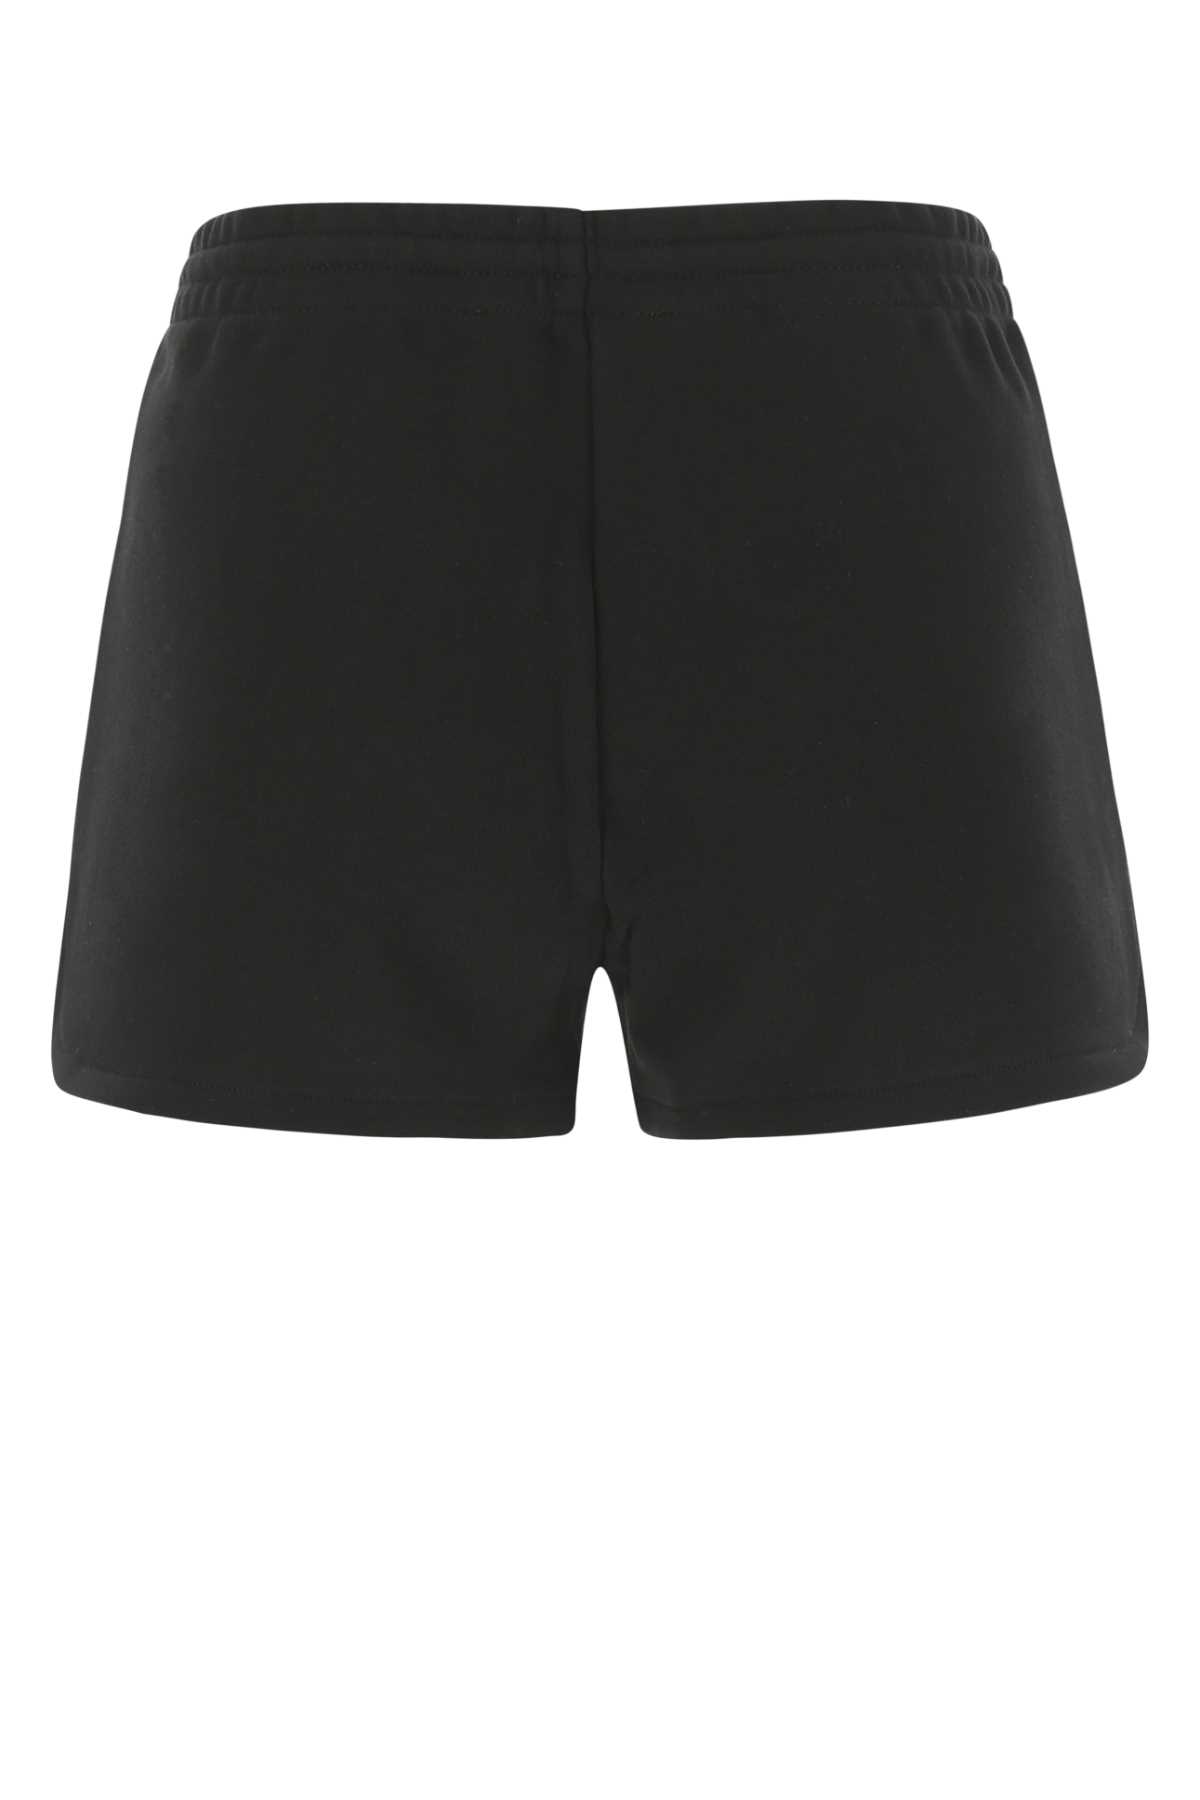 Moschino Black Cotton Shorts In 2555